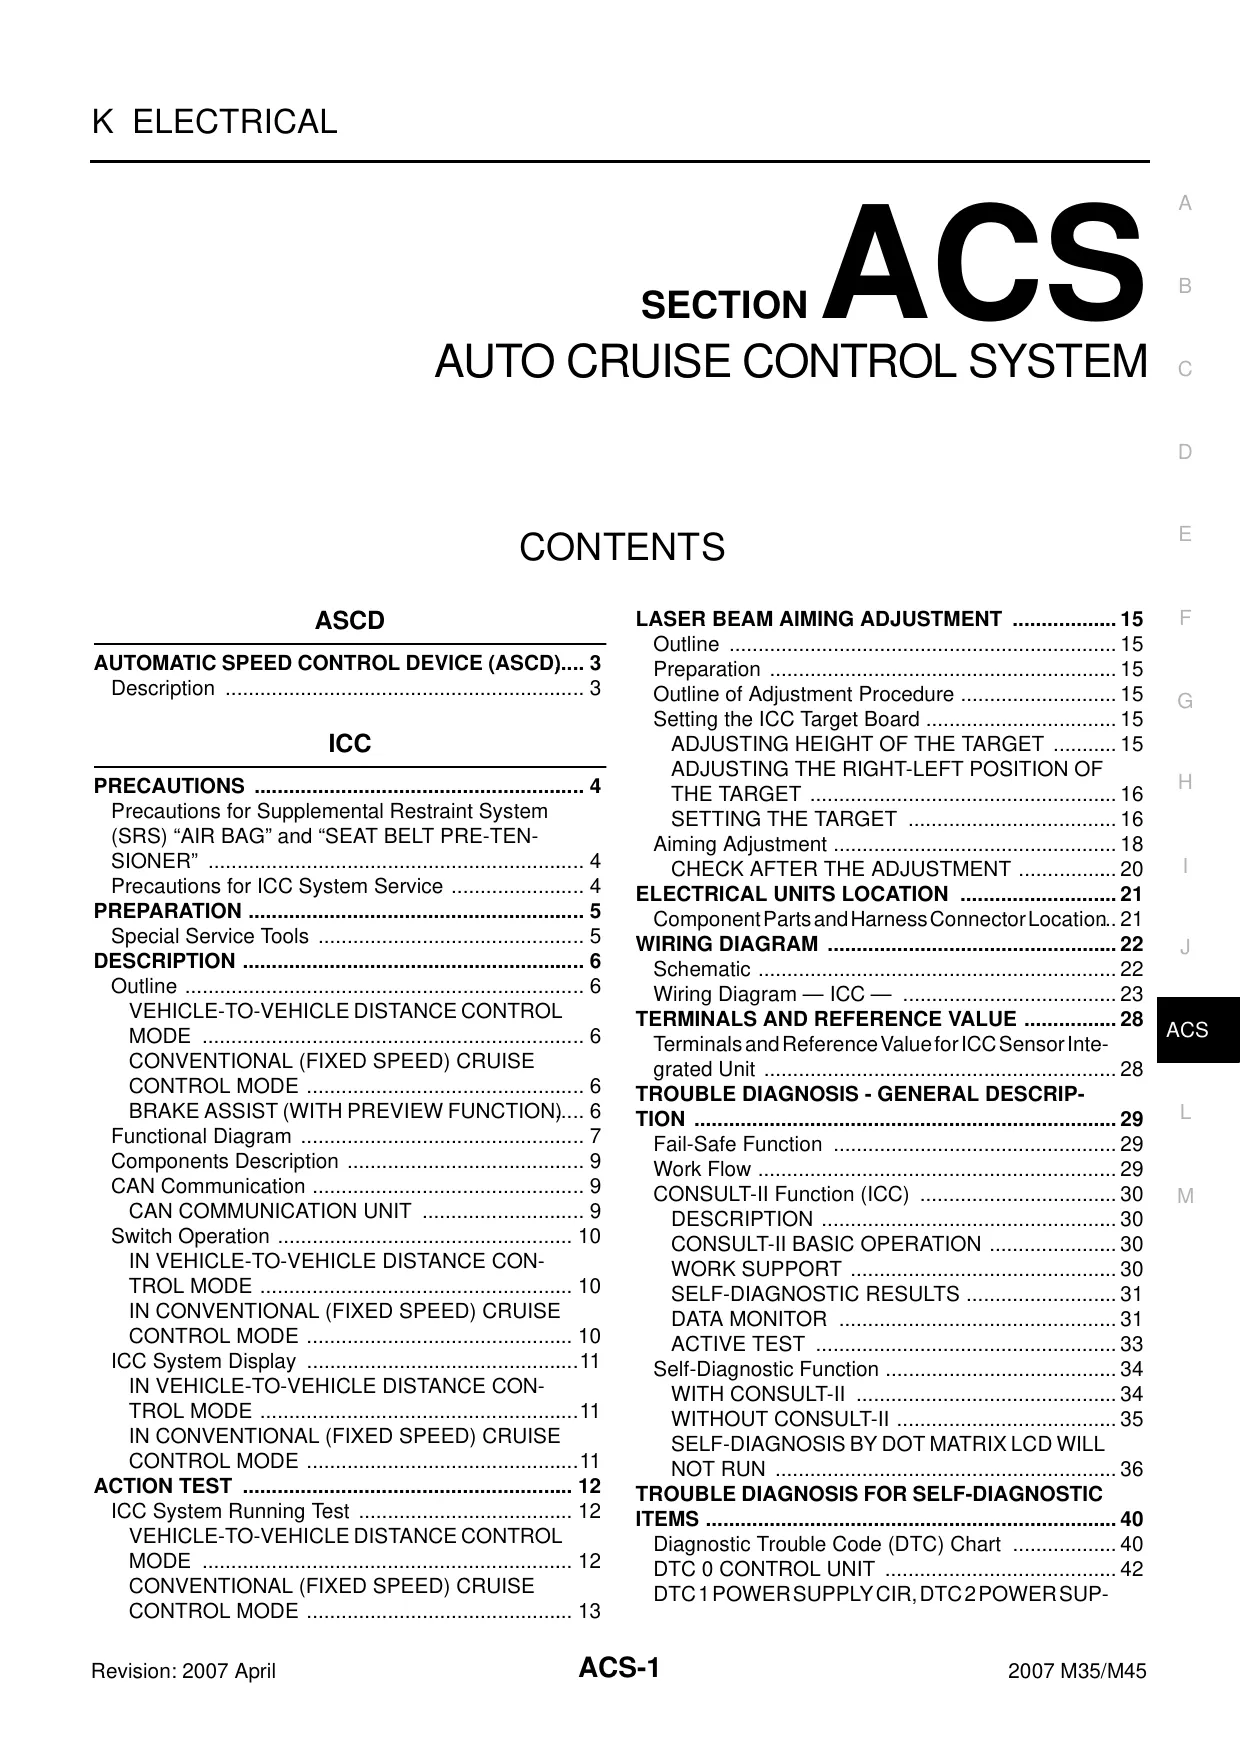 2007 Infiniti M35, M45 service manual